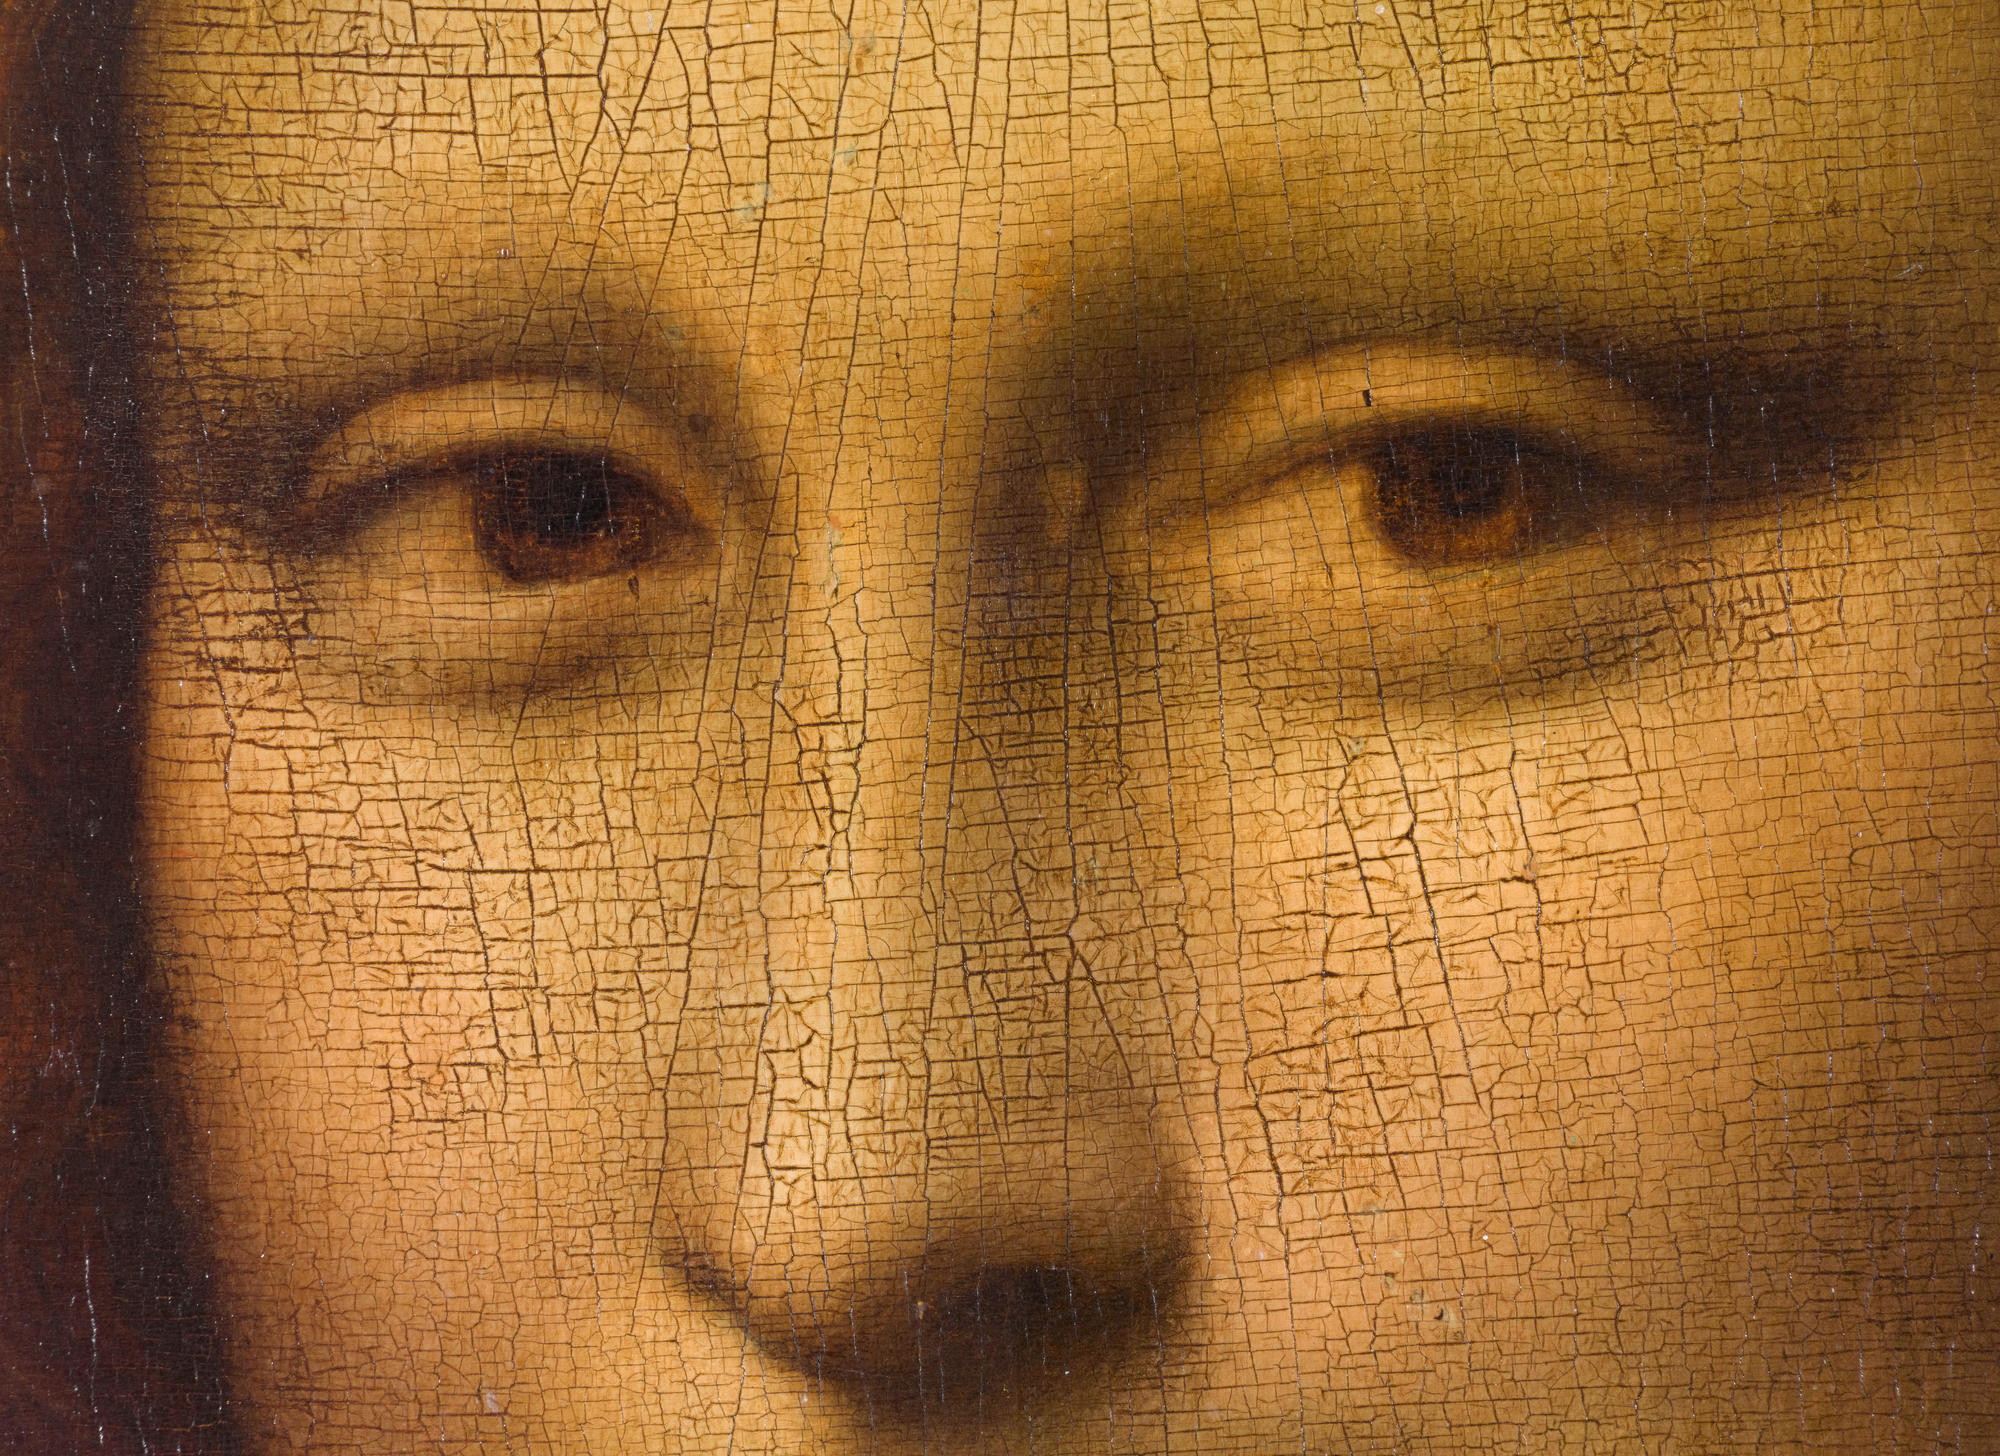 Mona Lisa (La Gioconda), detail of face. Oil on wood, 77 x 53 cm. INV779. Photo: Michel Urtado.